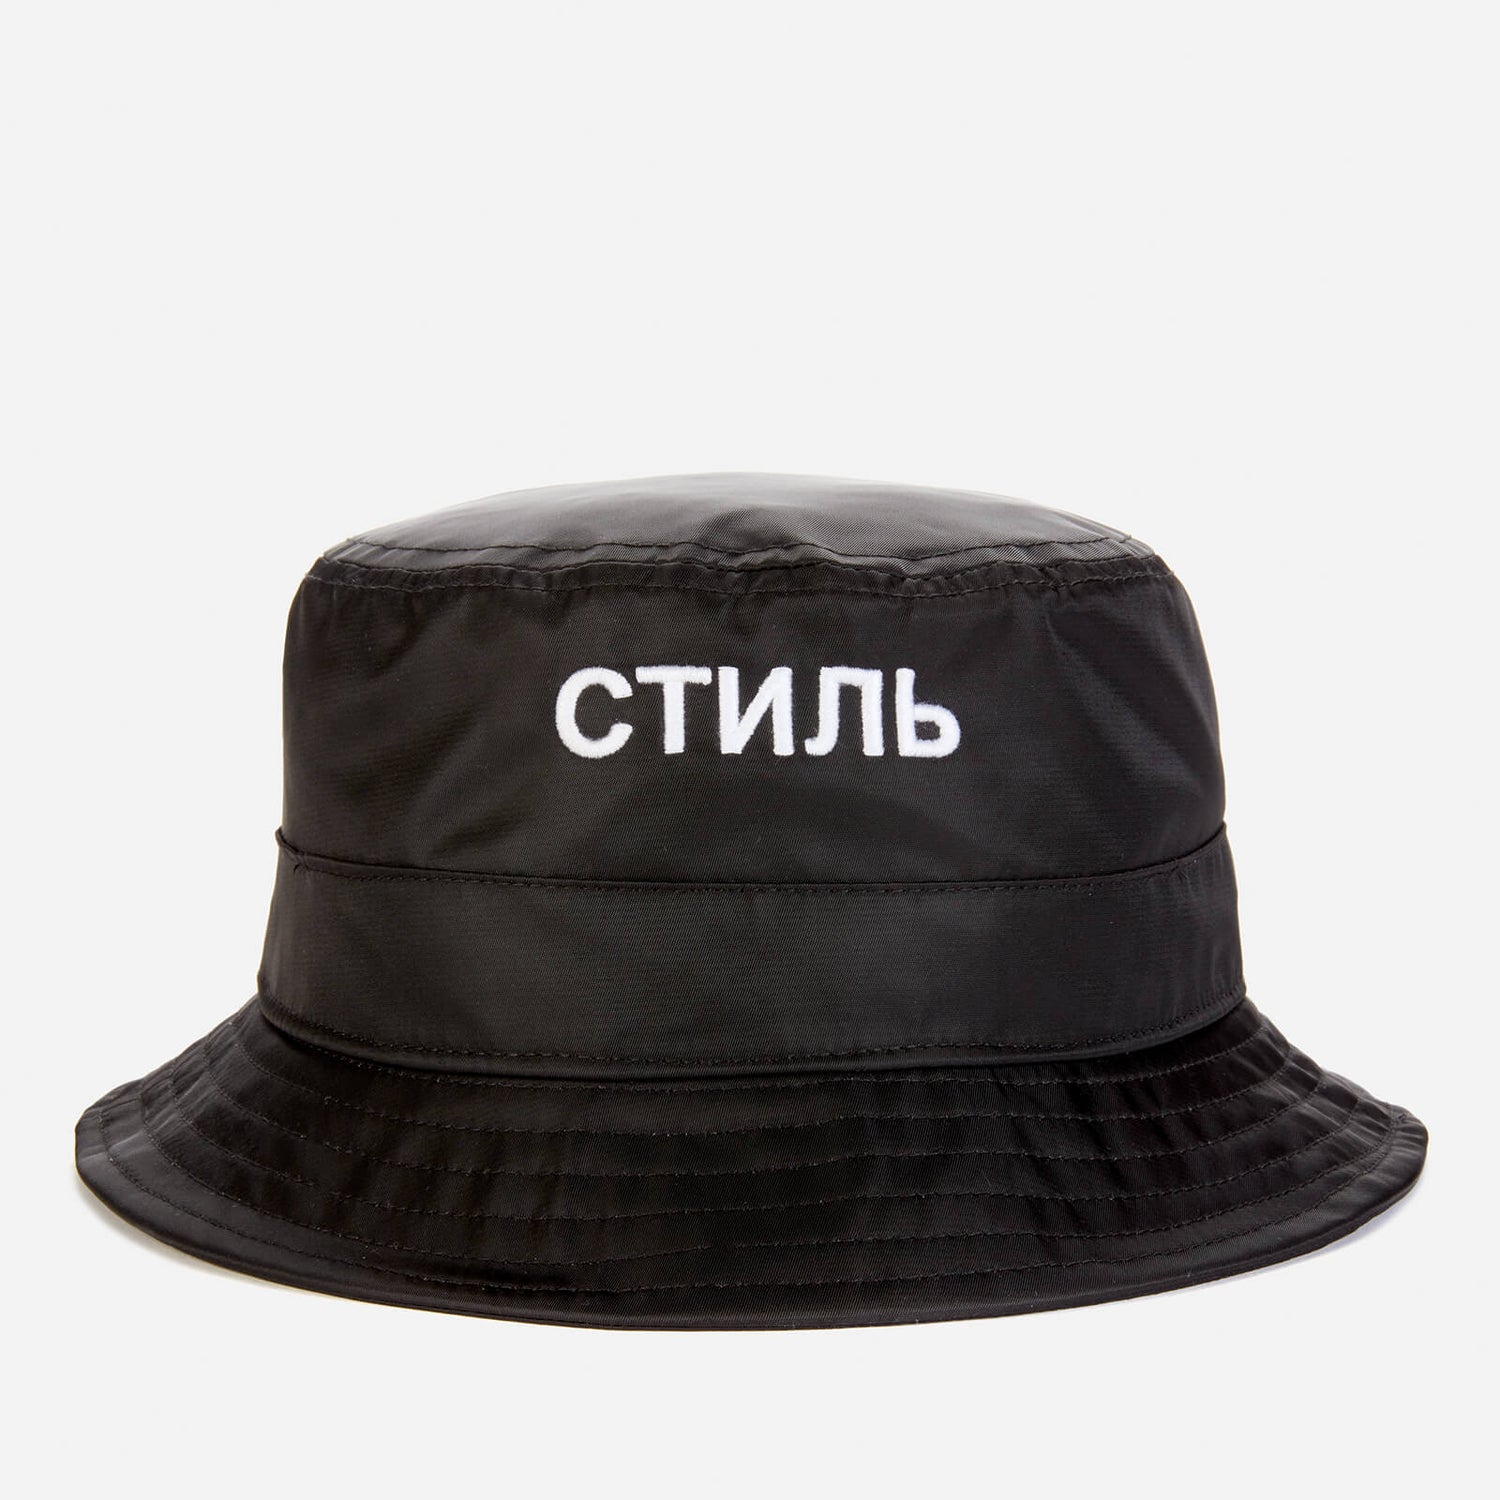 Heron Preston Men's Ctnmb Bucket Hat - Black - S/M